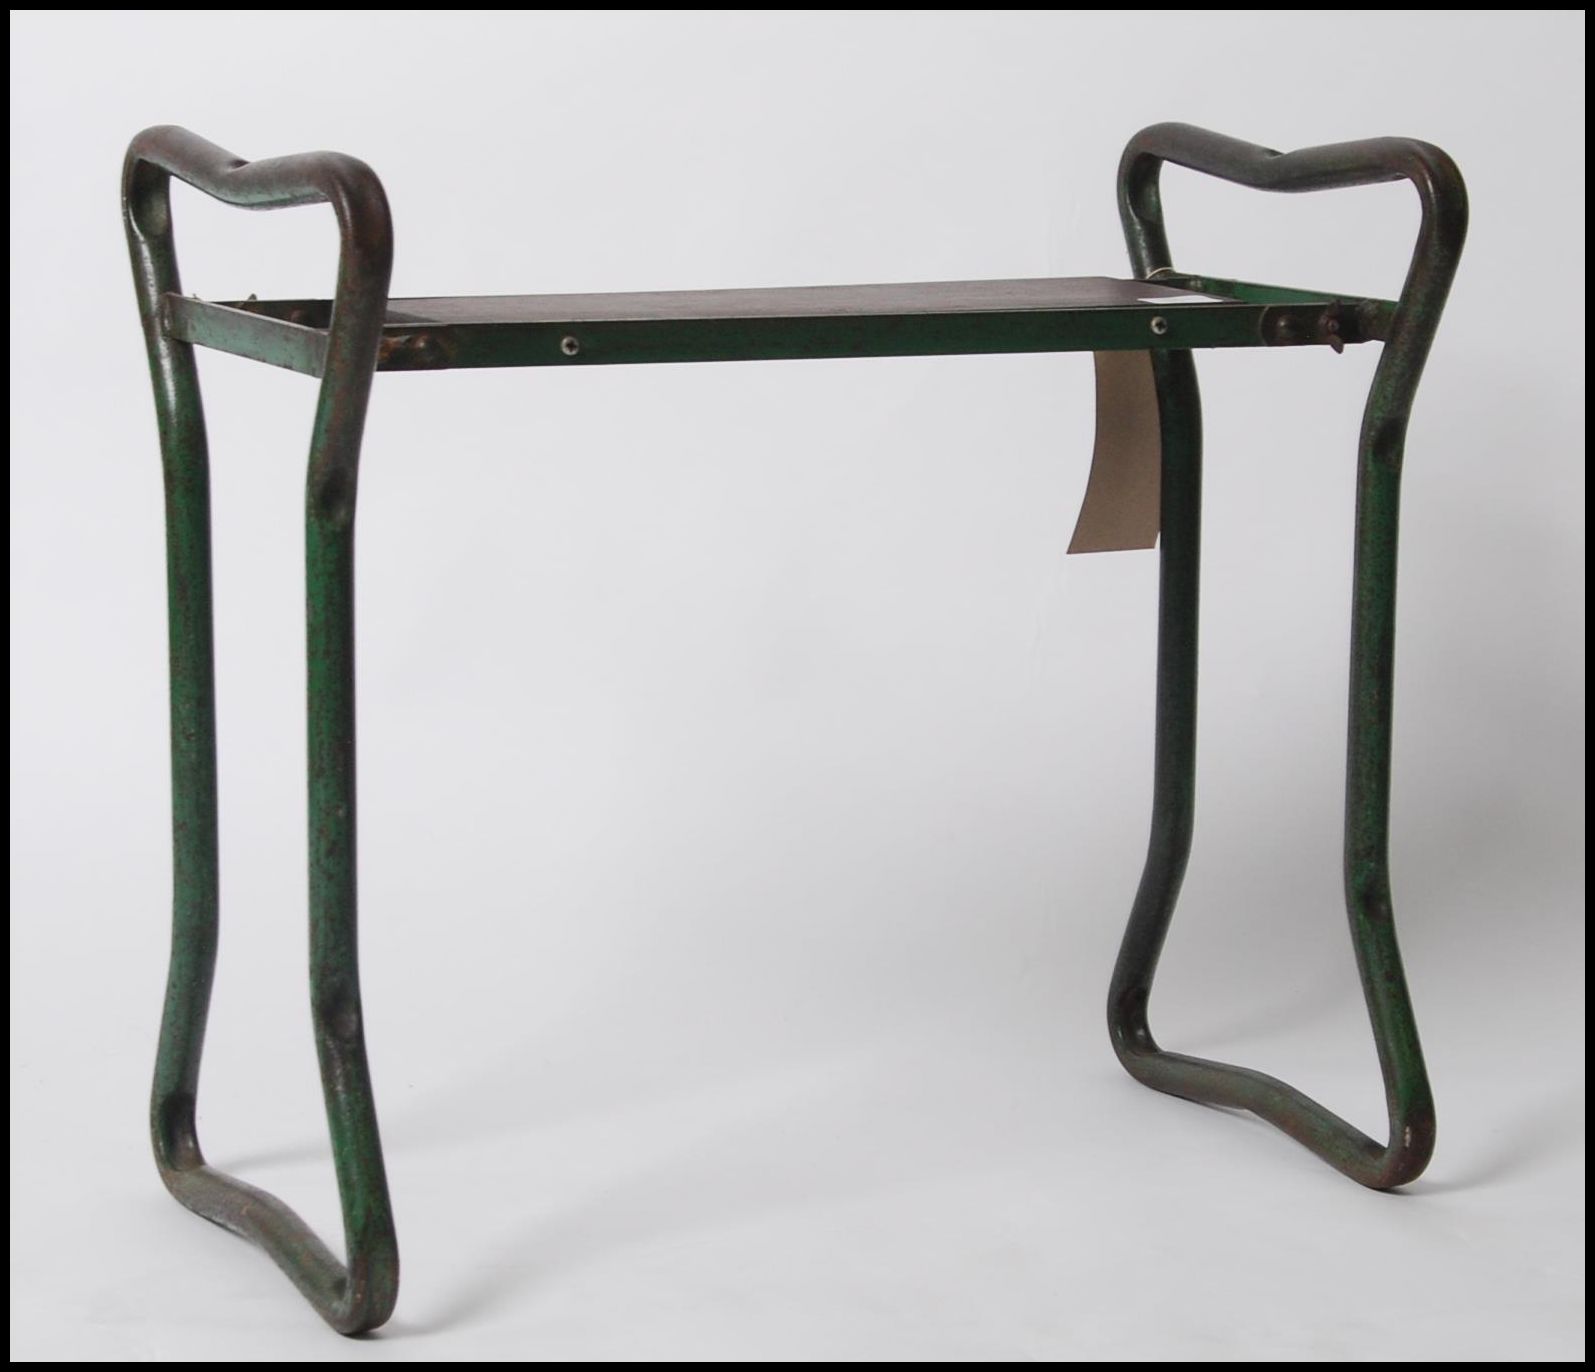 A vintage mid century 1950's tubular metal stool - bench seat having a polished pine plank seat -